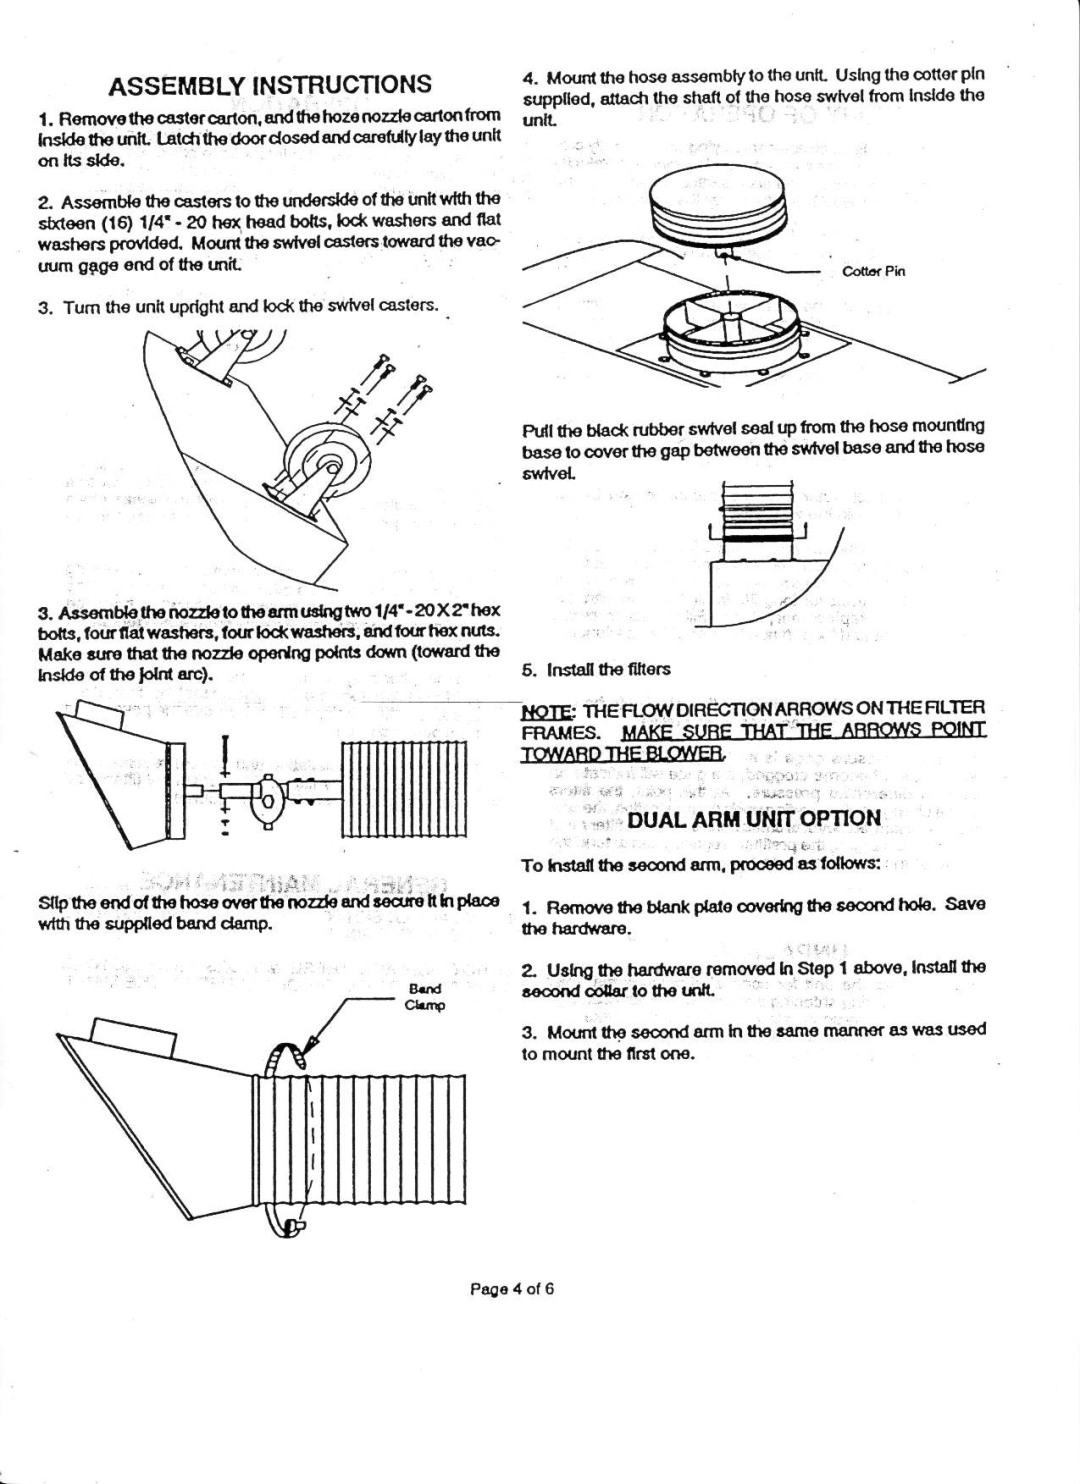 Associated Equipment 73-800 manual Assemblyinstructions 